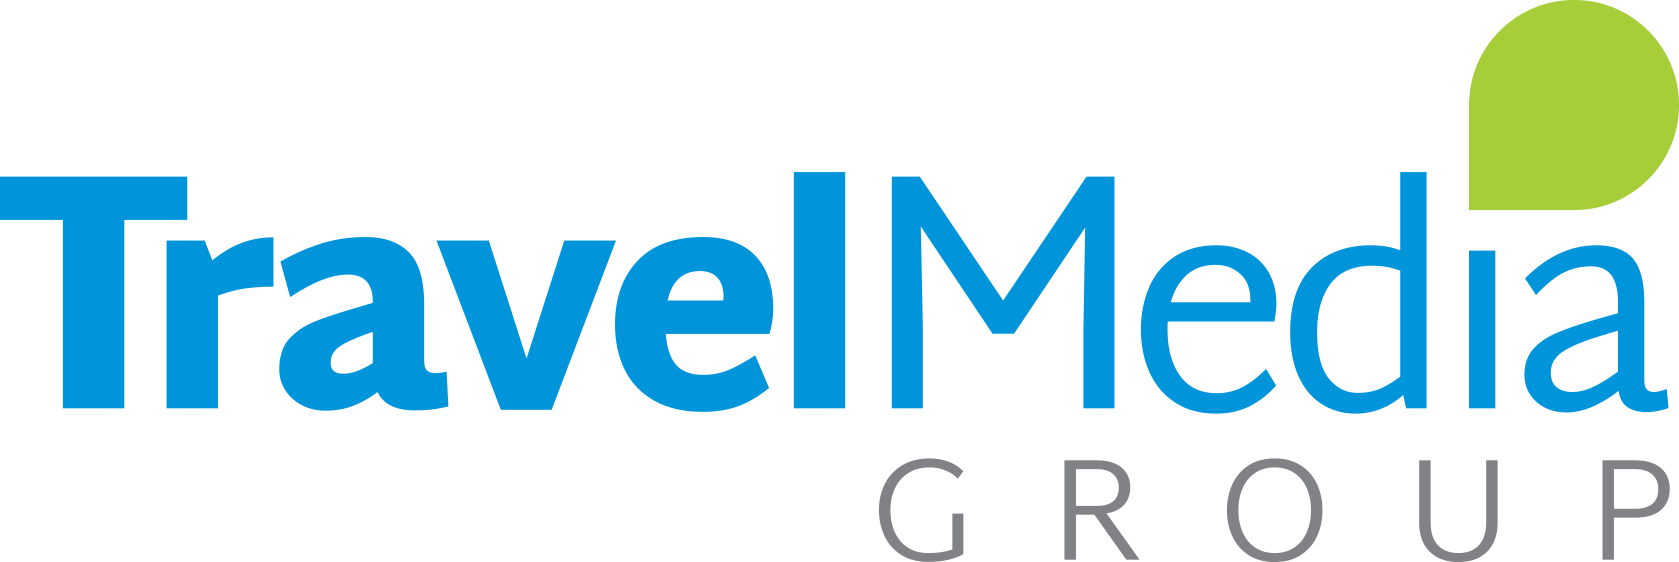 Travel Media Group Logo PNG